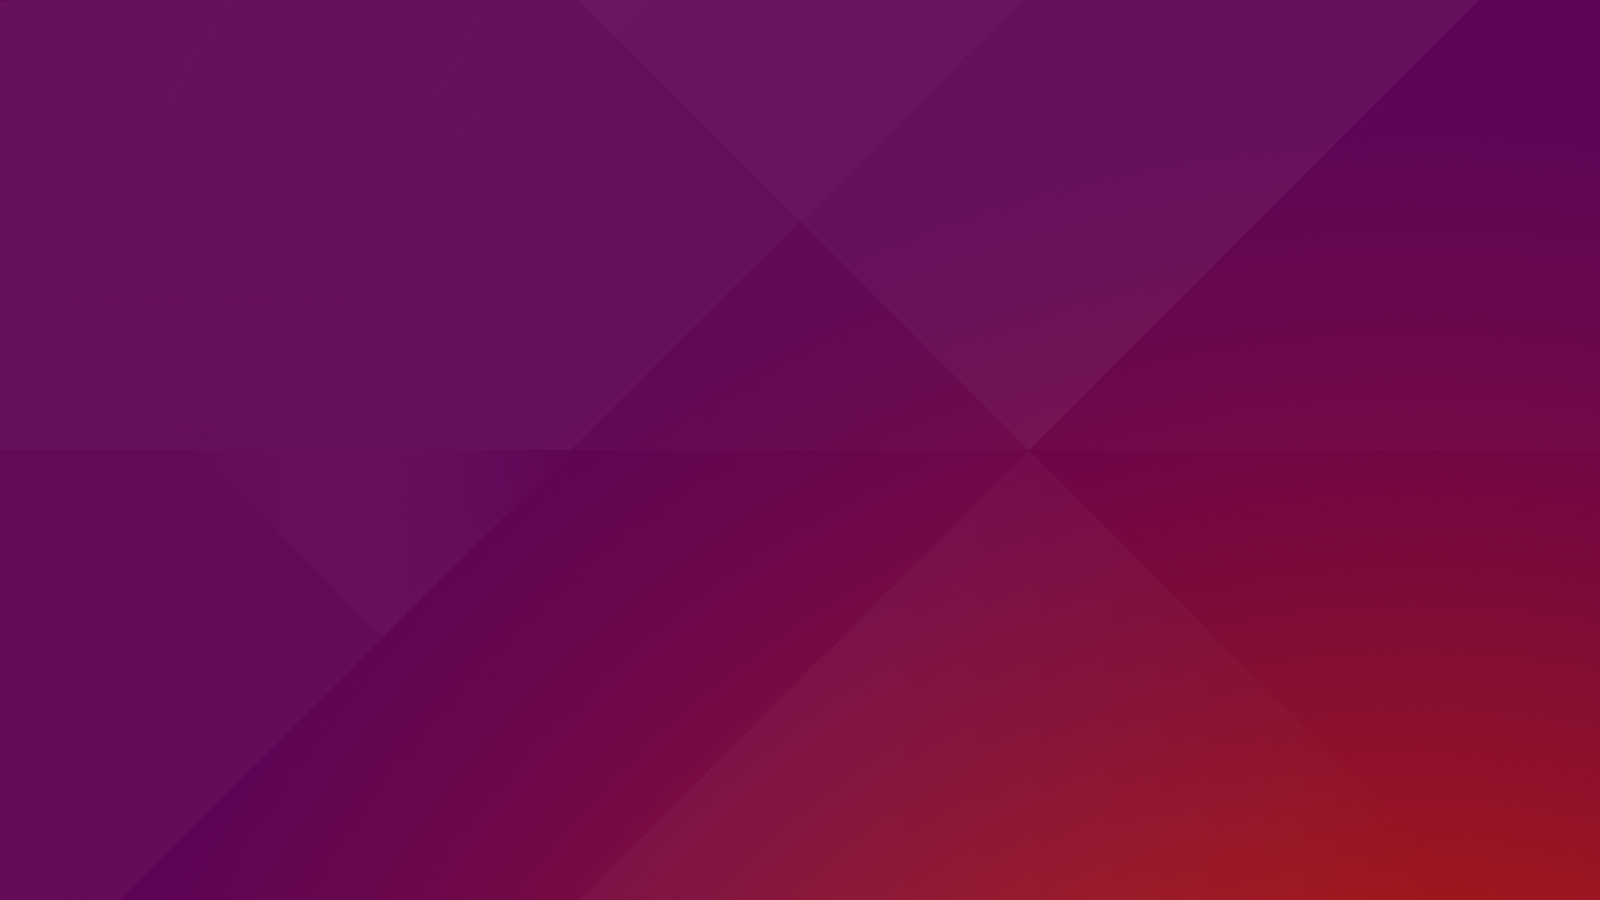 Ubuntu  - 1600x900 Wallpaper 